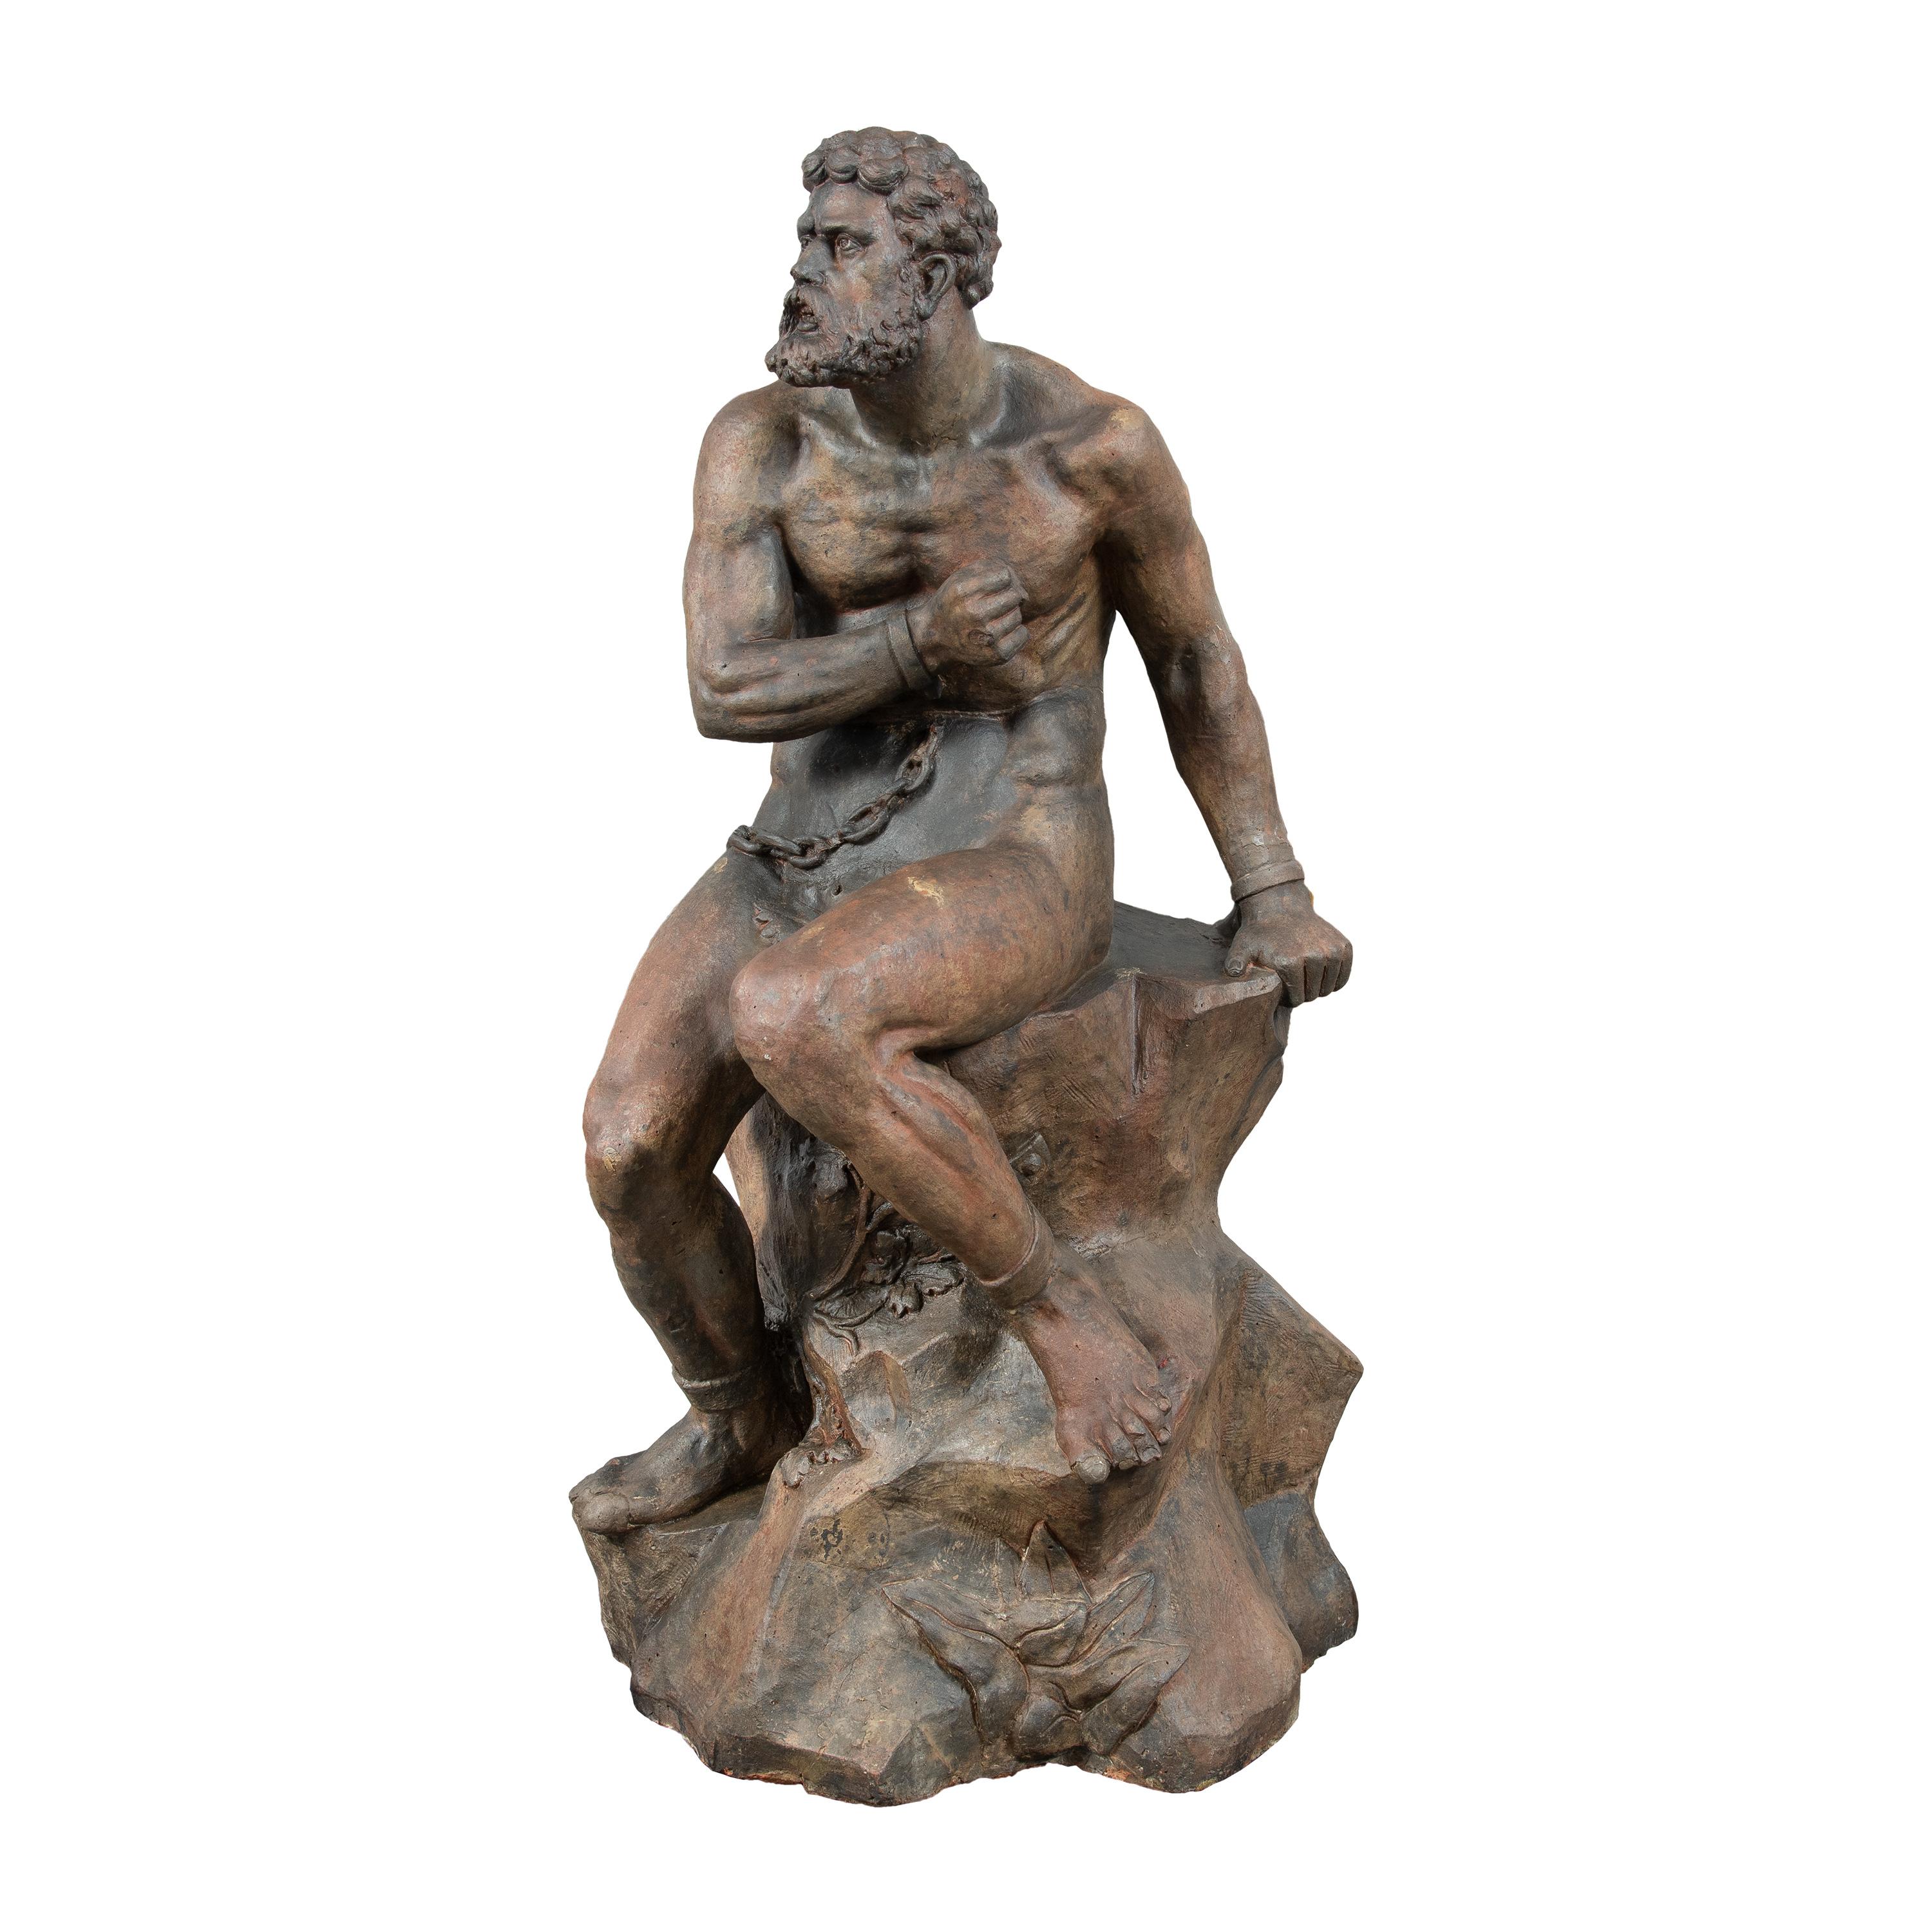 Unknown Nude Sculpture - Baroque master sculptor - 18th century terracotta sculpture - Prometheus figure